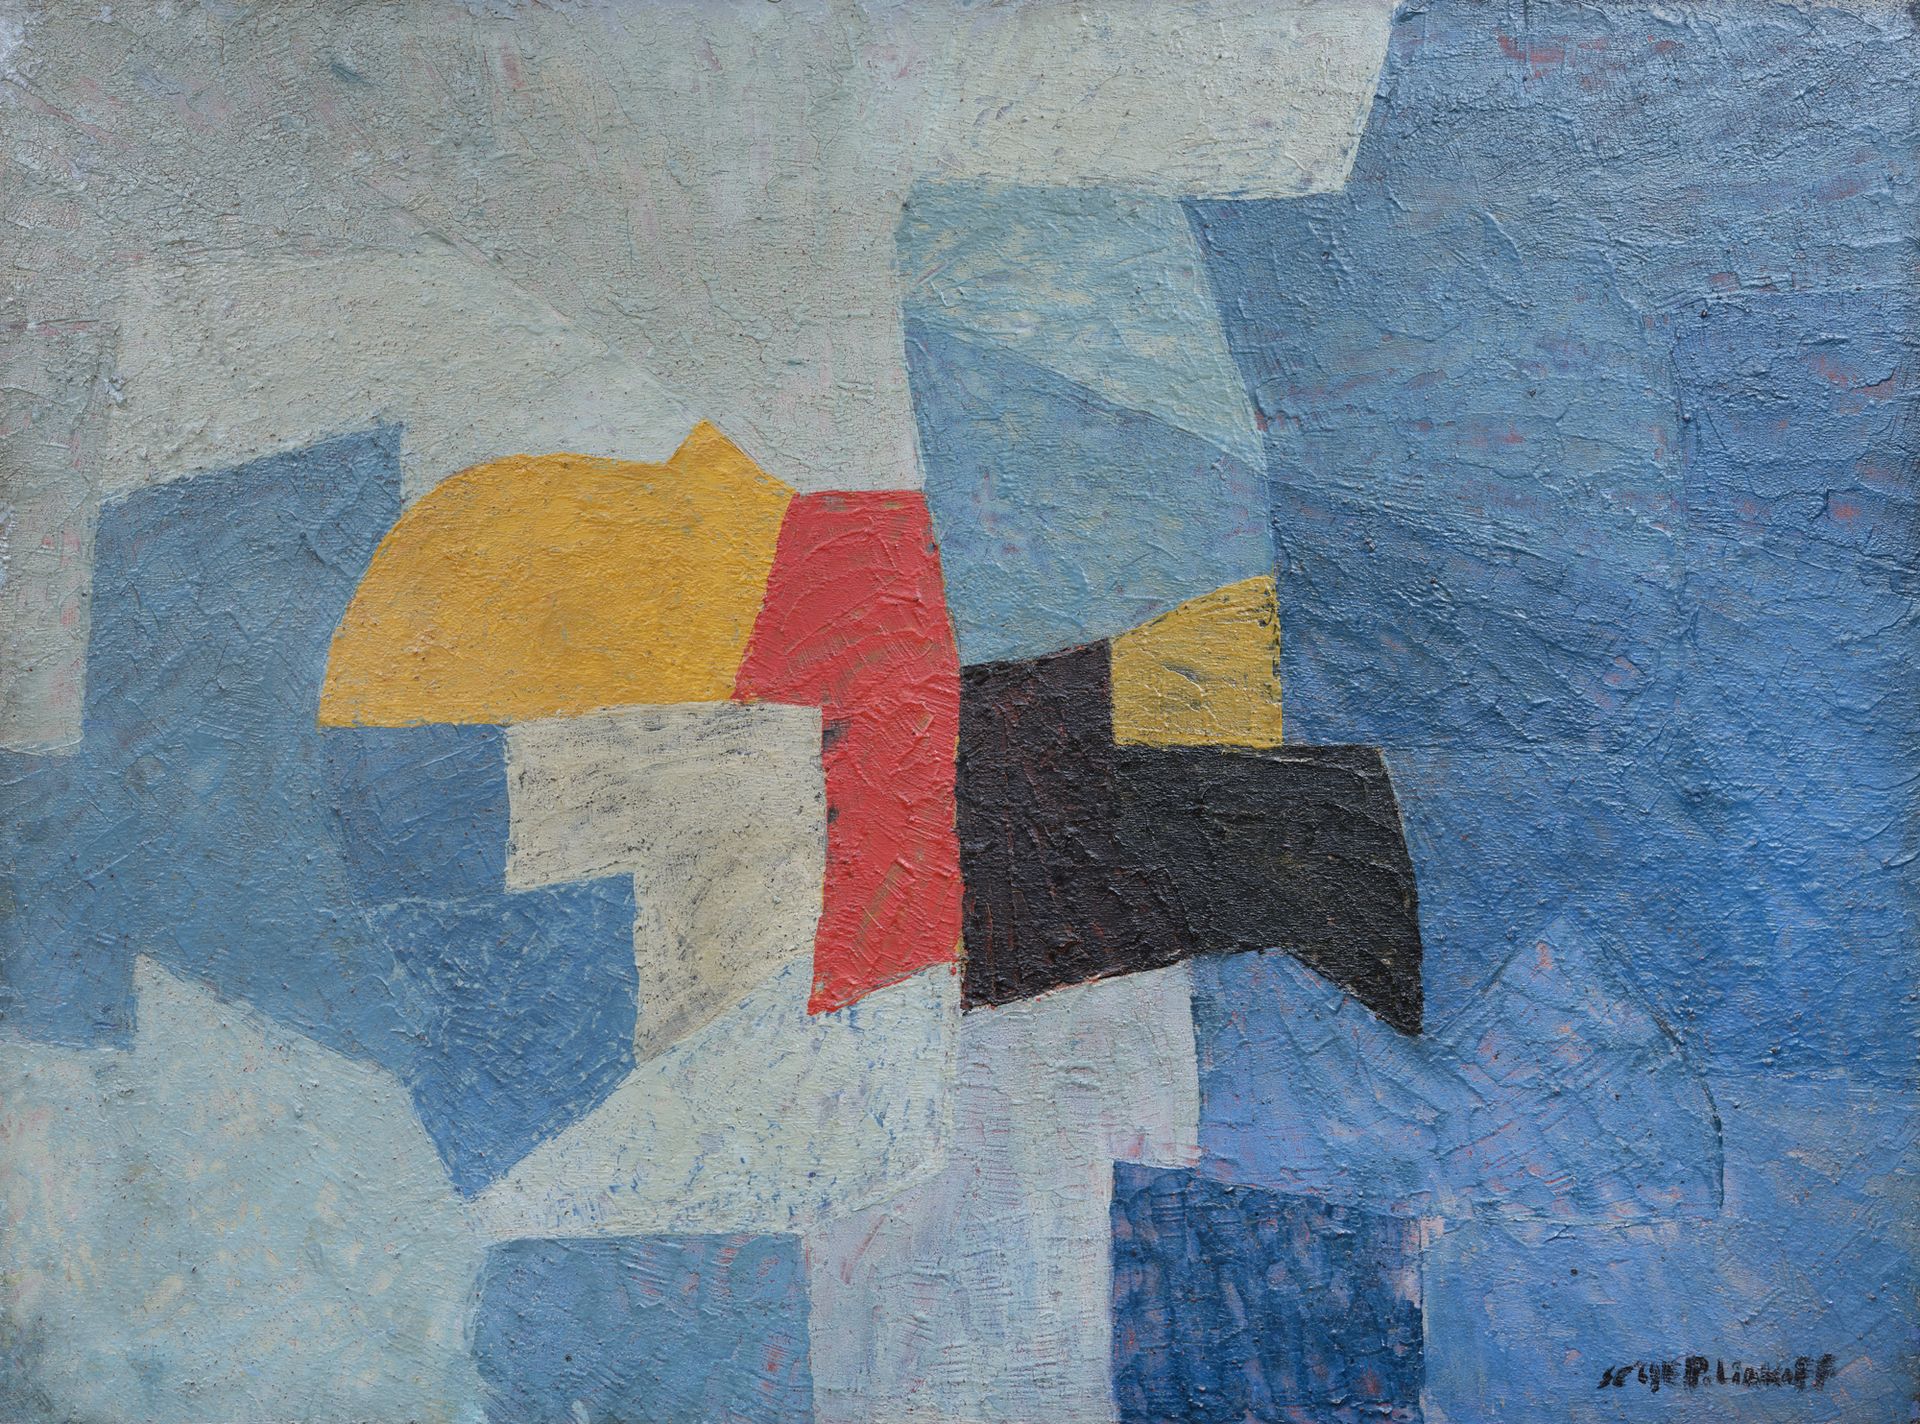 Serge POLIAKOFF (1900-1969) 抽象构图 56-84，1956 年
画板油画，右下方有签名，背面有连署，地点为巴黎，日期为 1956 年&hellip;